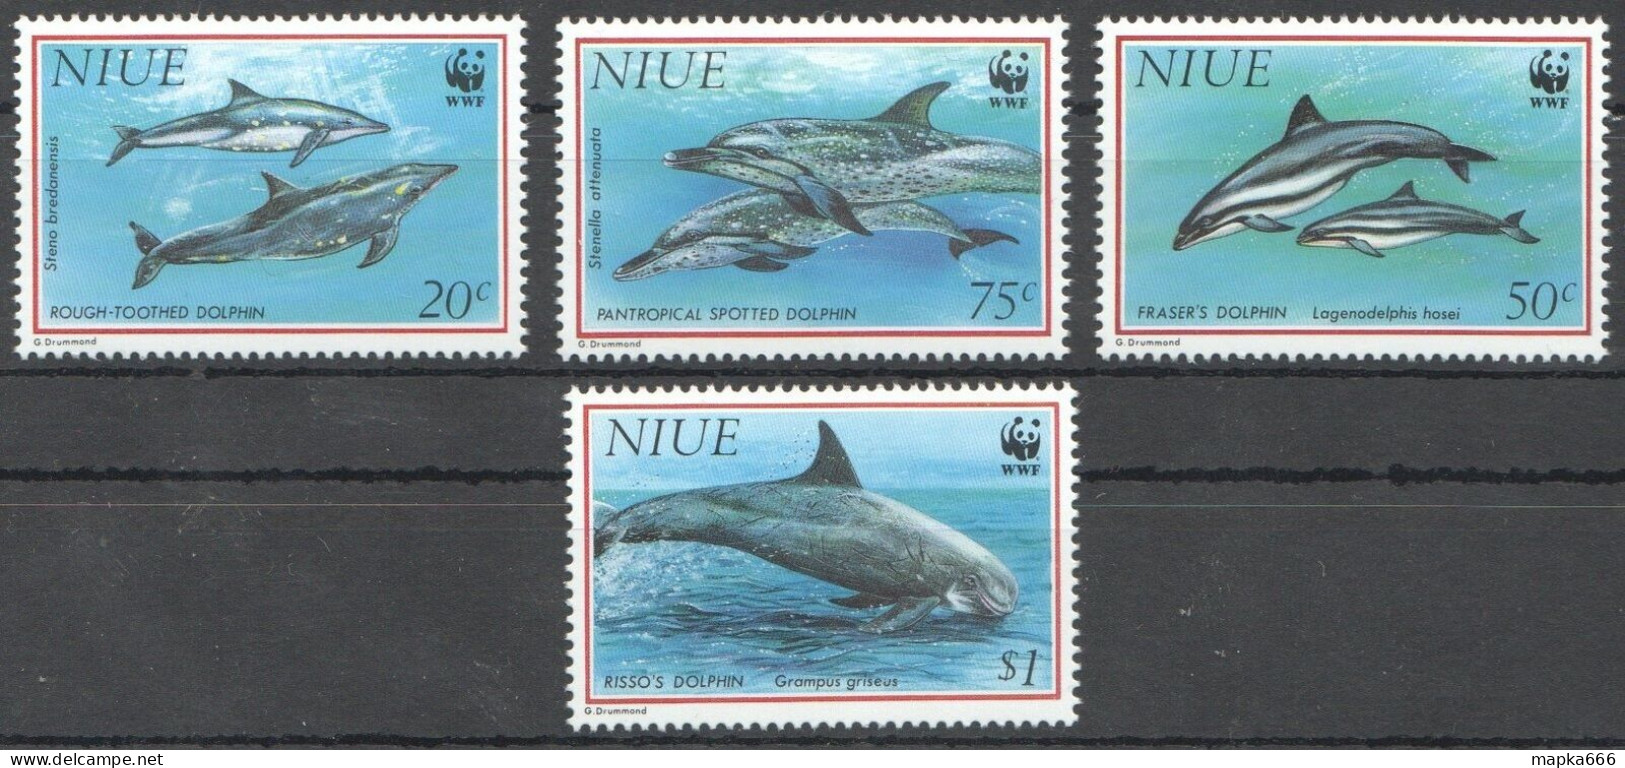 Ft124 1993 Niue Wwf Dolphins Fish & Marine Life #822-25 Michel 16 Euro 1Set Mnh - Mundo Aquatico